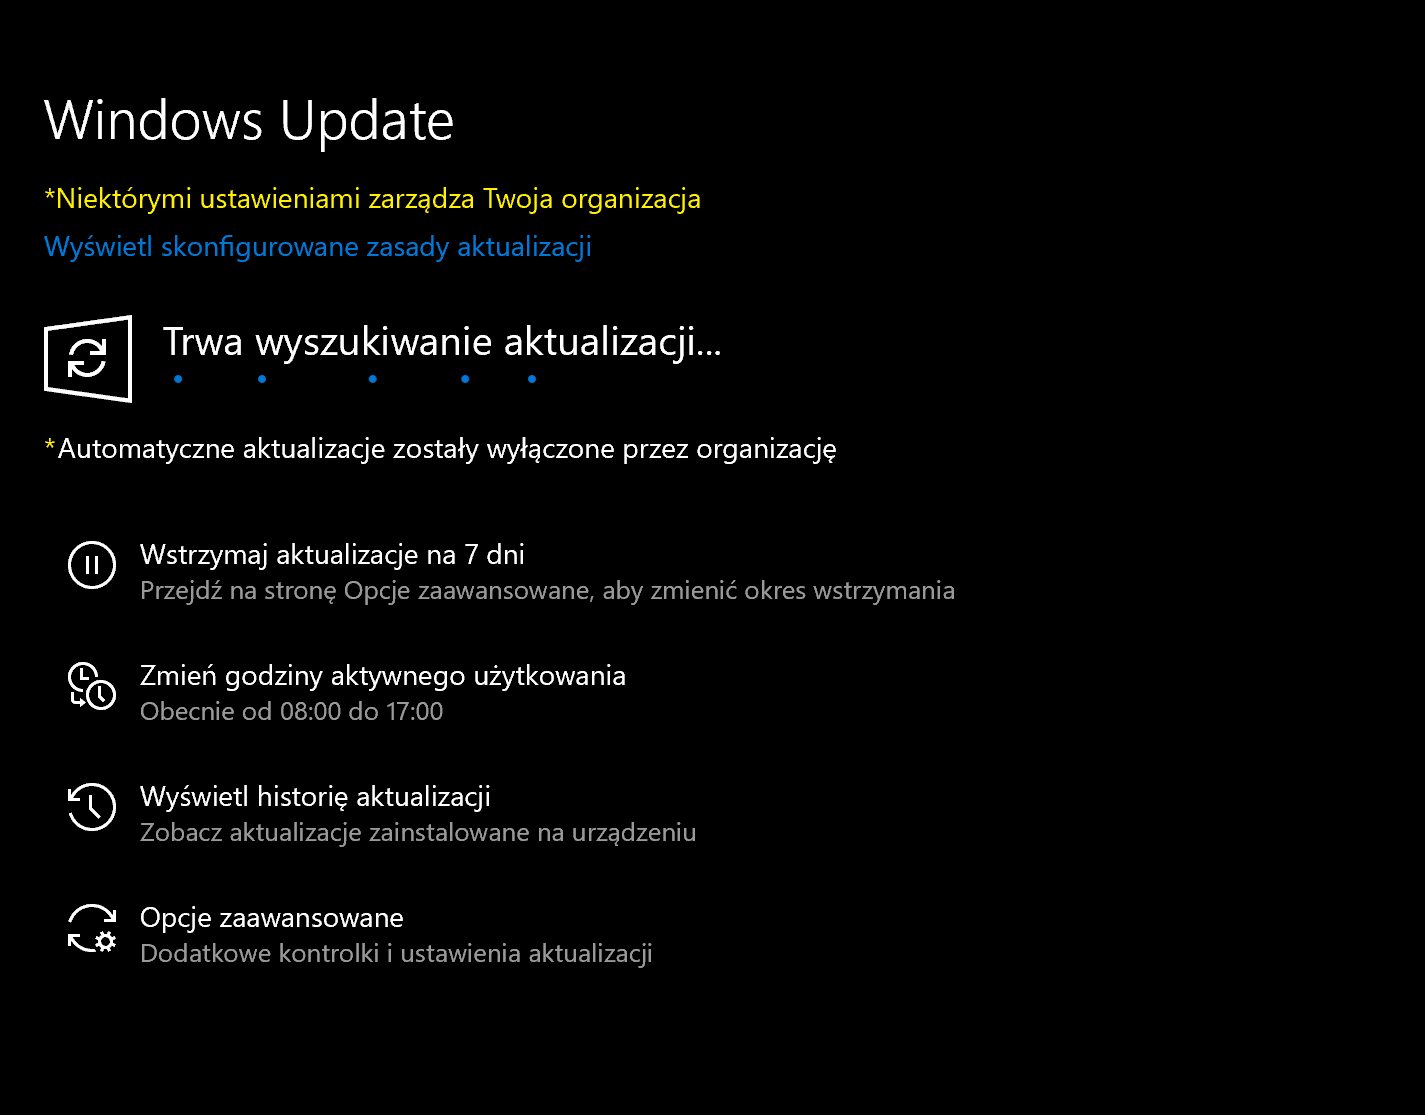 Windows Update as part of organization